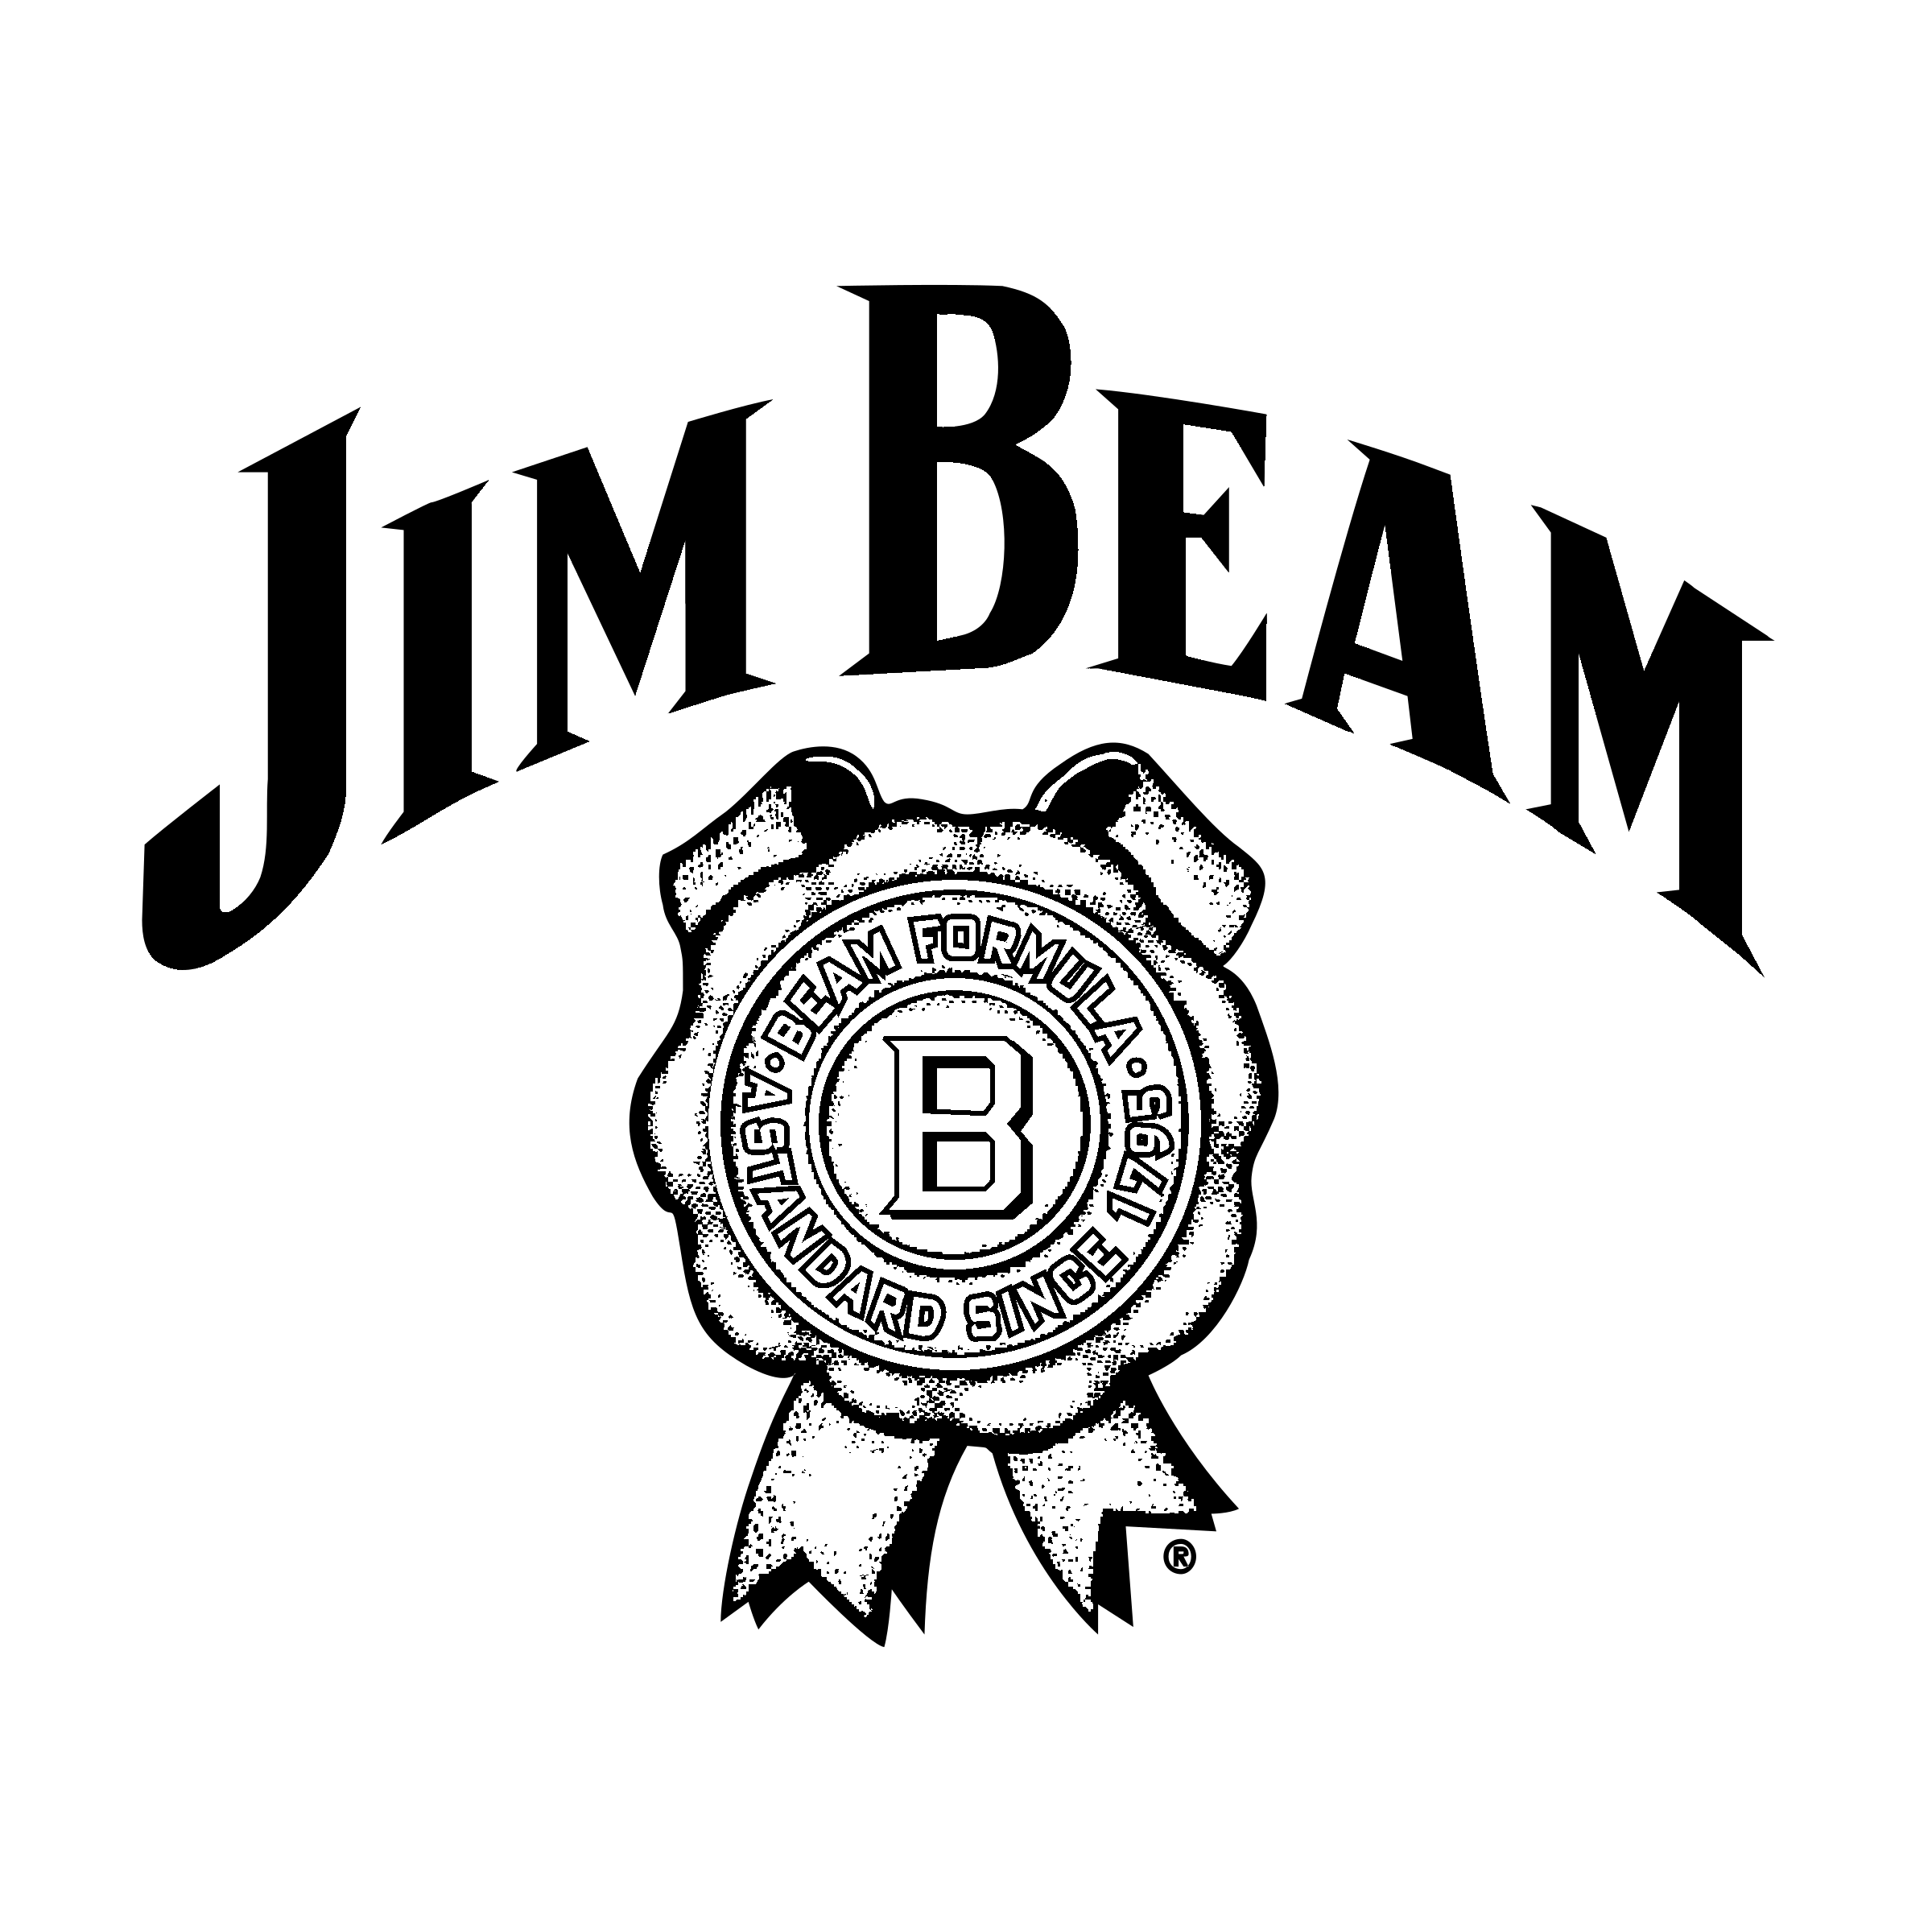 Jim Beam Logo Png Transparent & Svg Vector - Pluspng Pluspng, Jim Beam Logo PNG - Free PNG